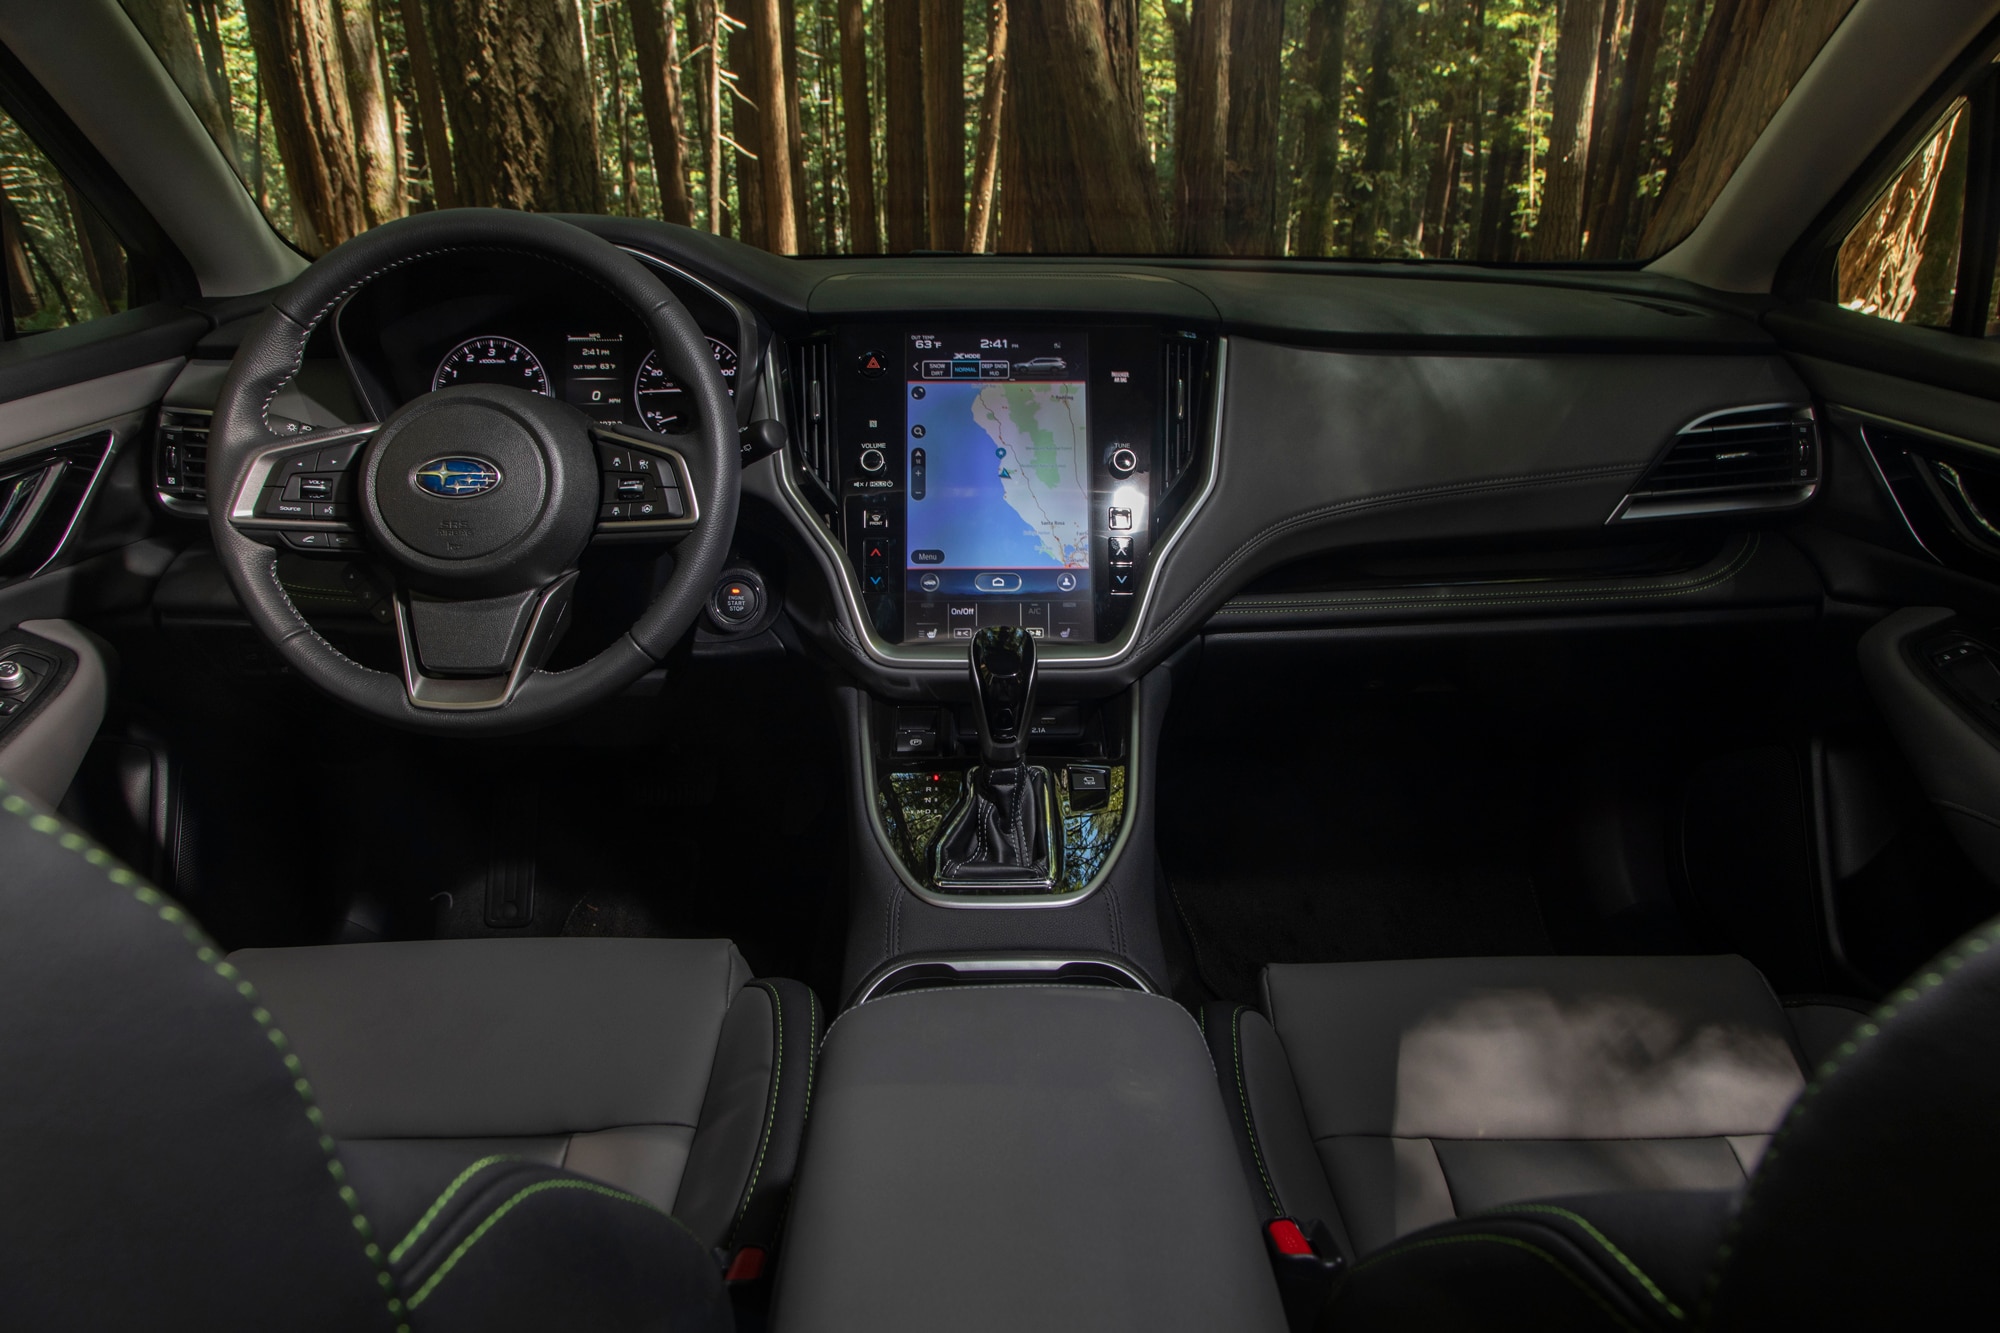 Subaru Outback interior and dashboard